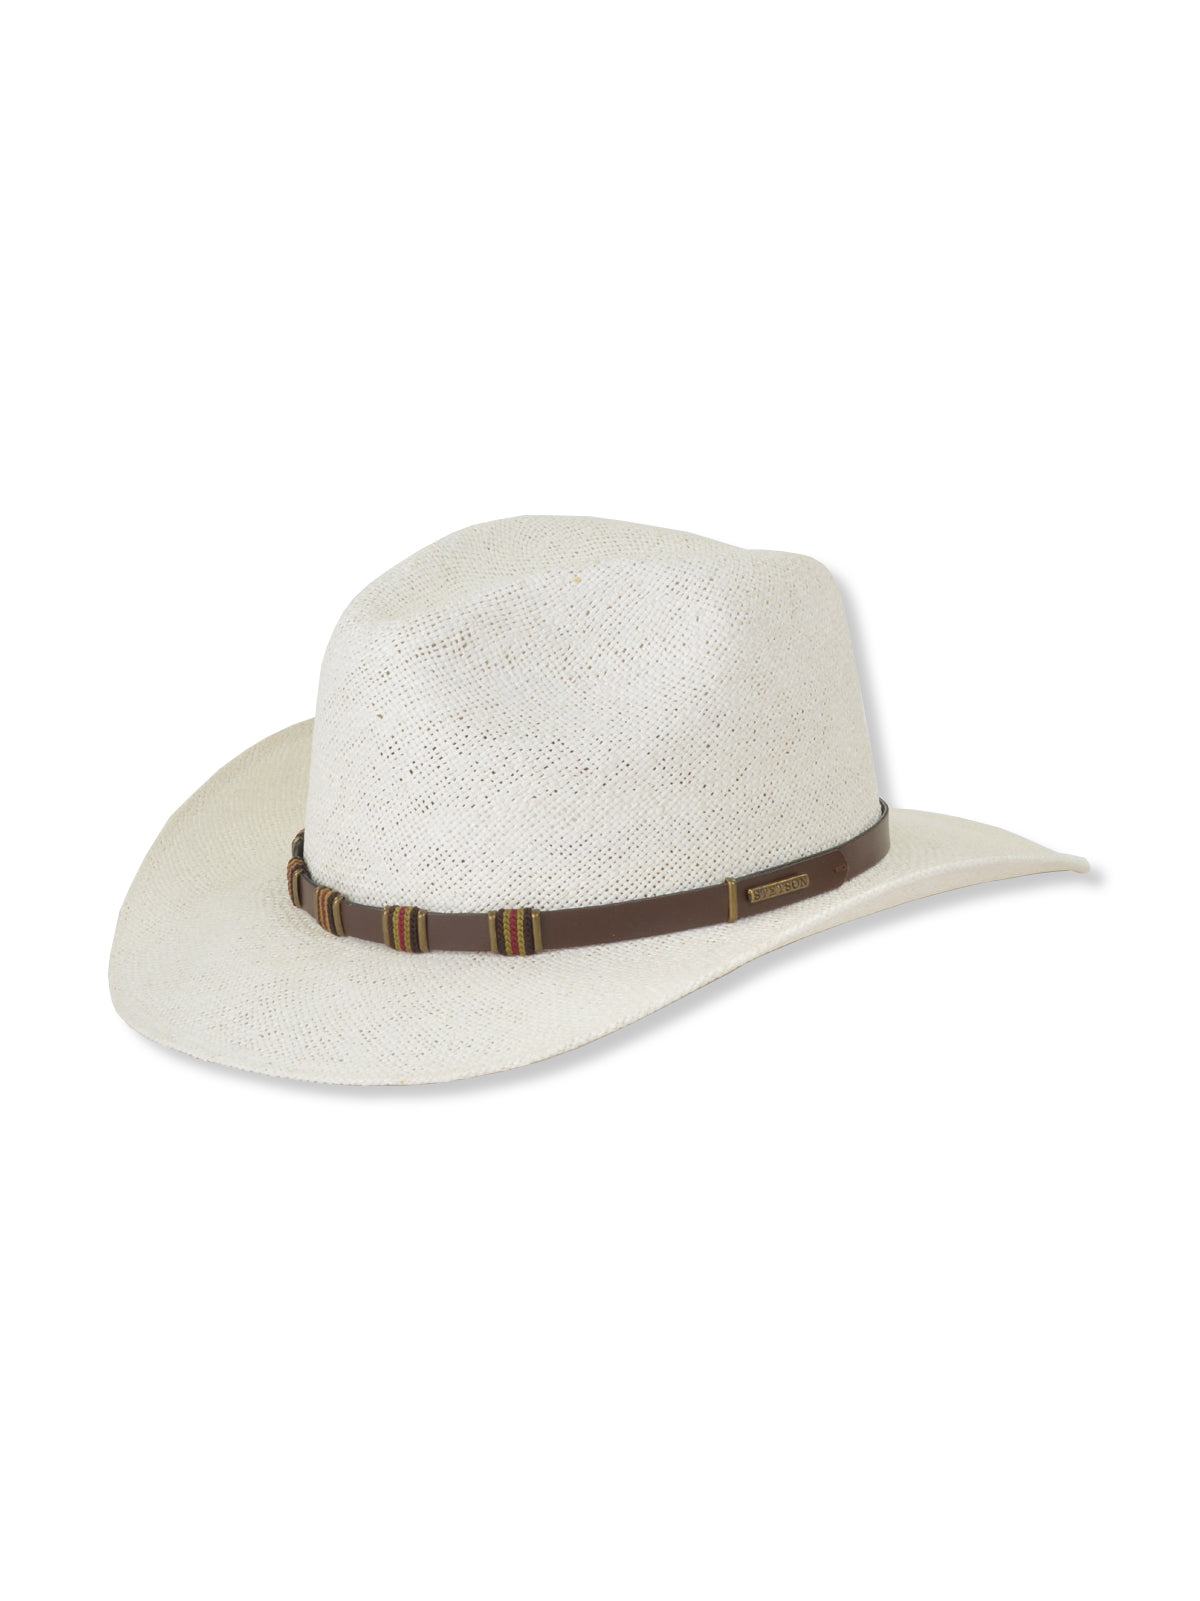 Stetson 'Wilson' Woven Jute Straw Cowboy Hats SSWILS-2130